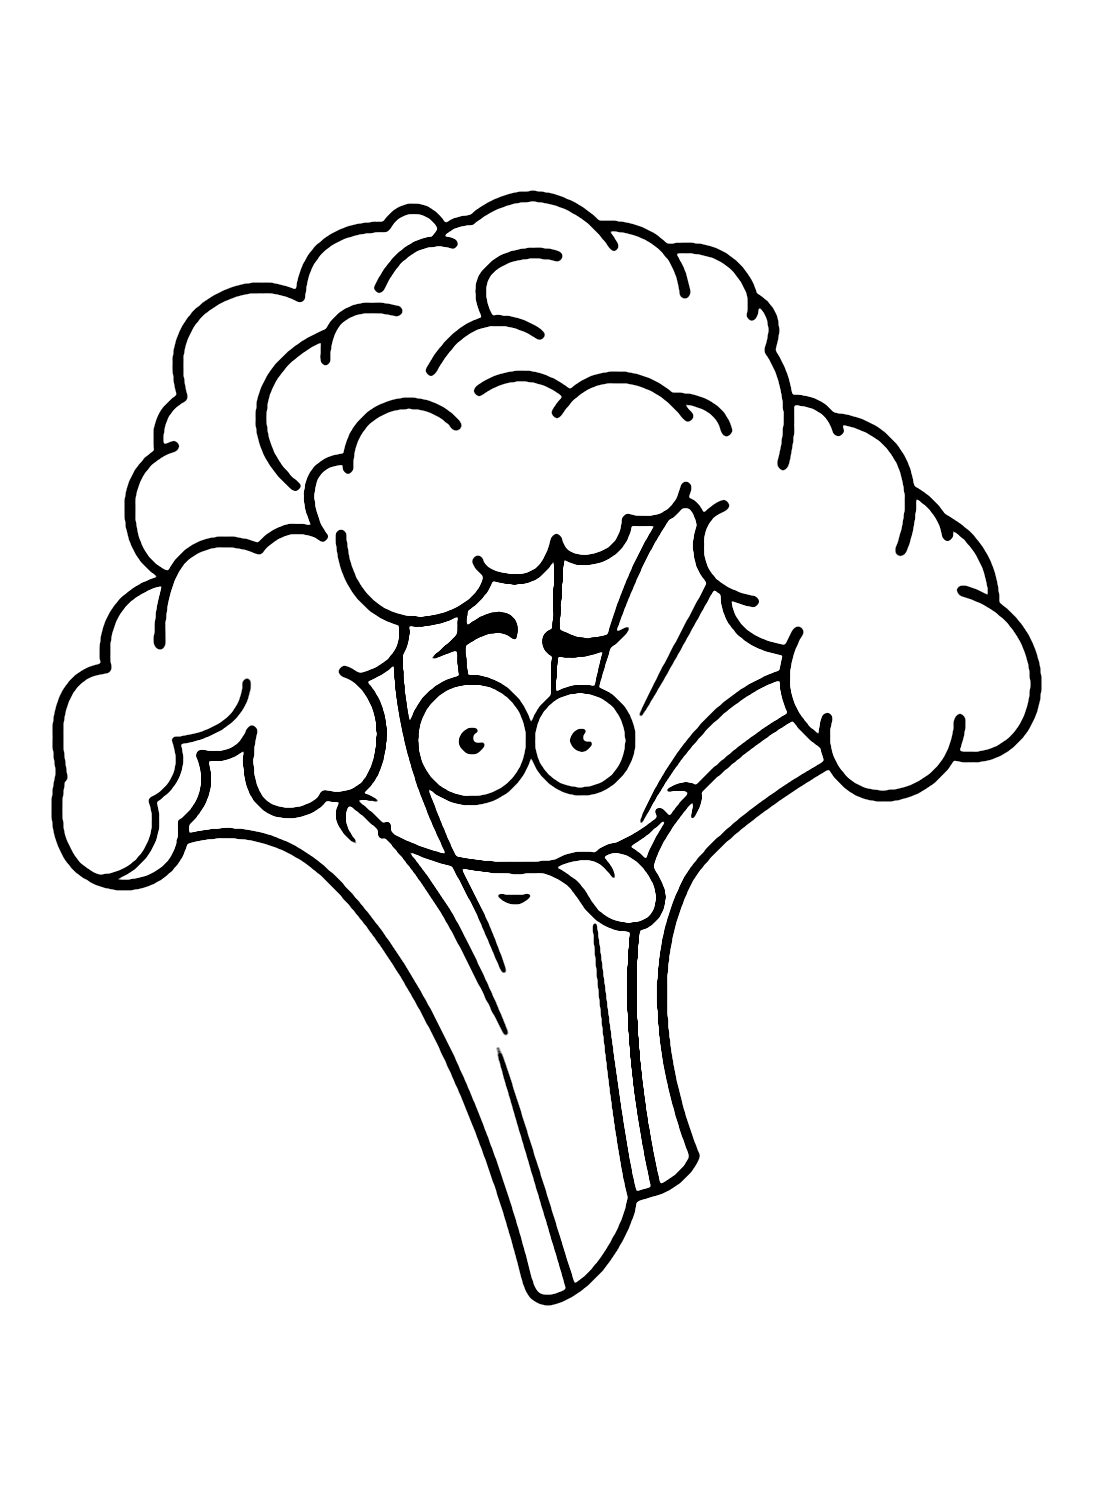 Grappige Broccoli-cartoon van Broccoli